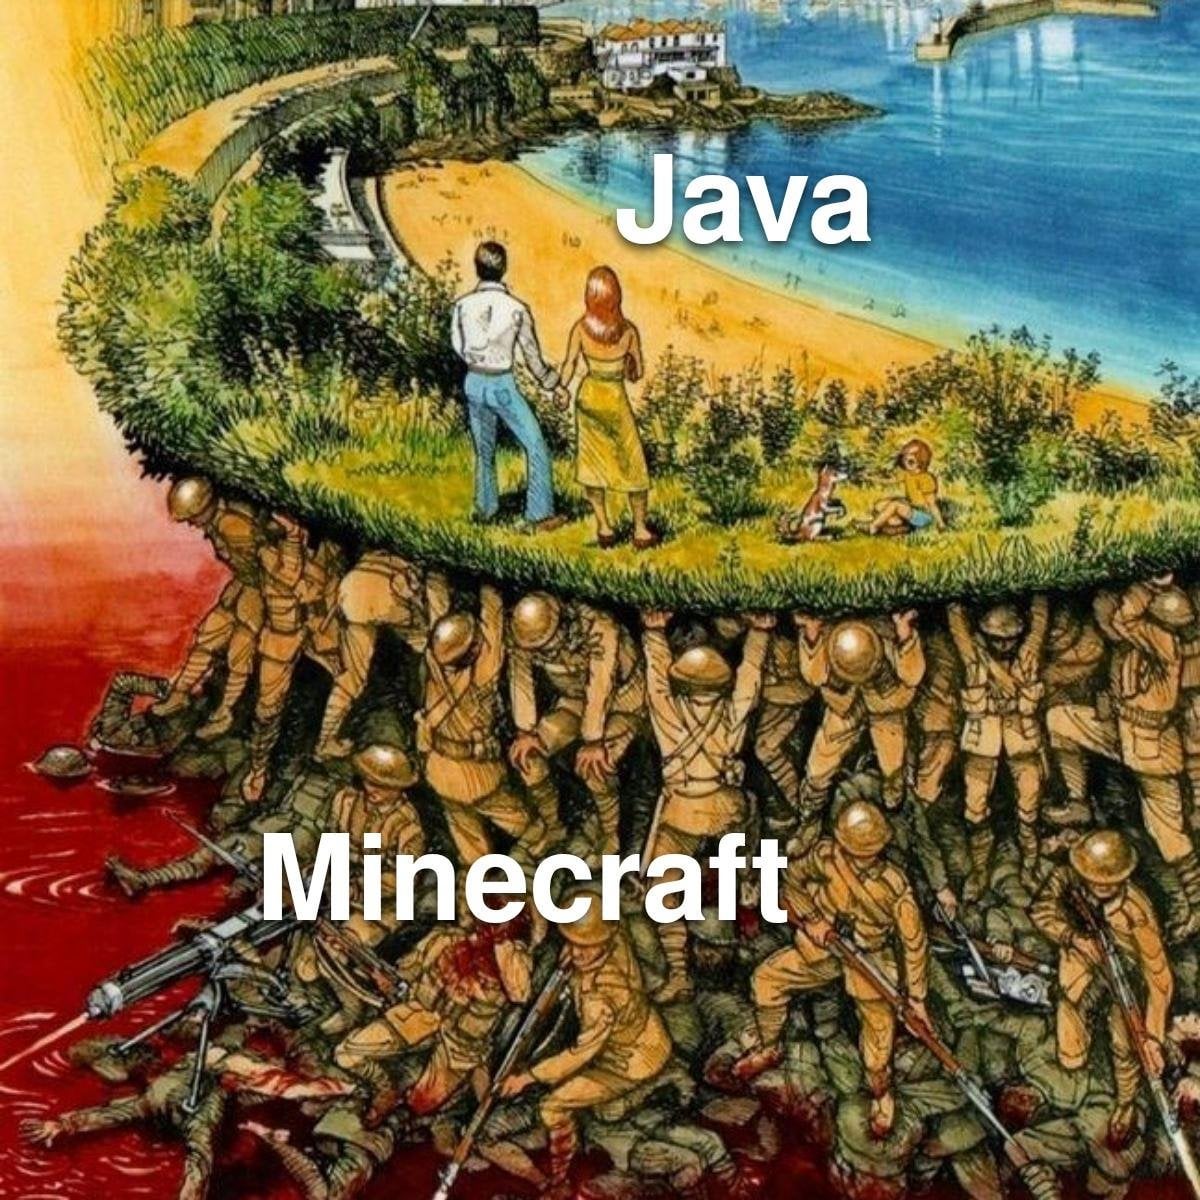 Minecraft Memes - Java Edition's demise = Java's downfall